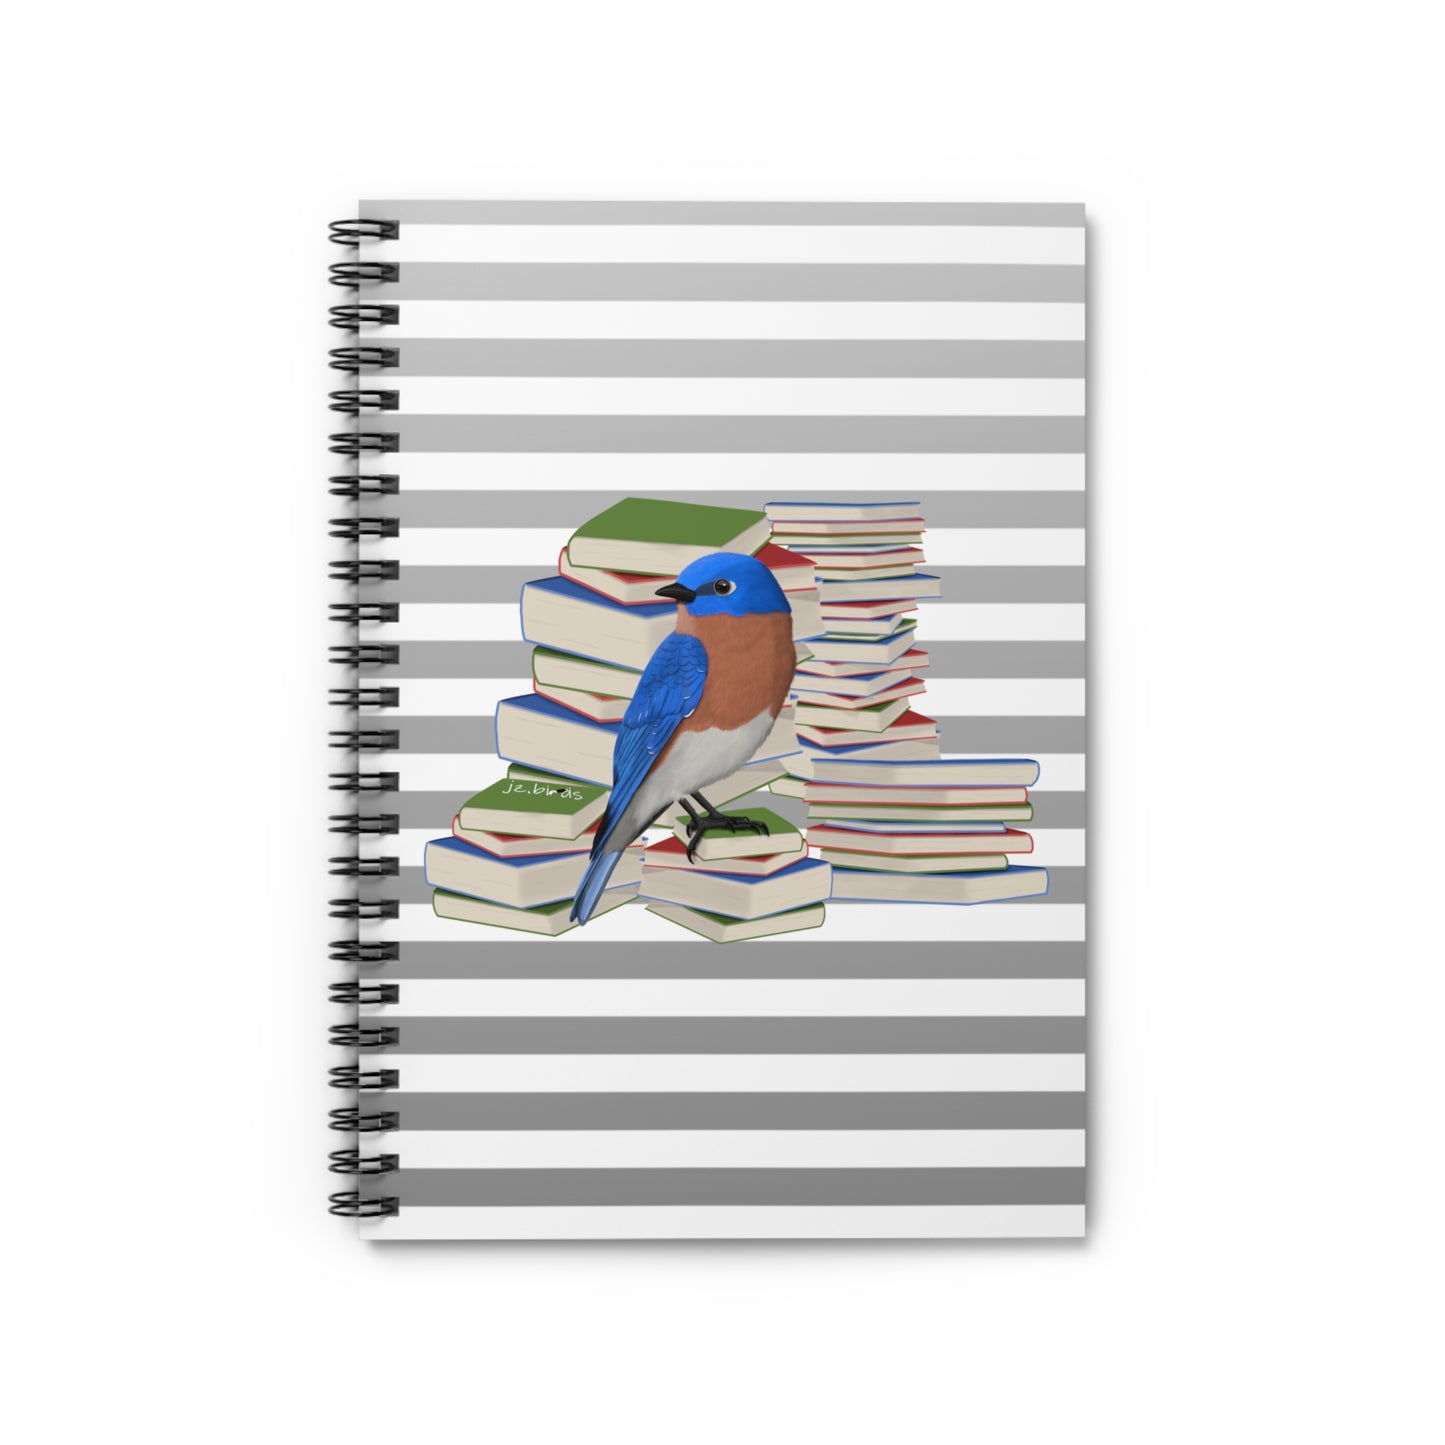 Eastern Bluebird Bird with Books Birdlover Bookworm Spiral Notebook Ruled Line